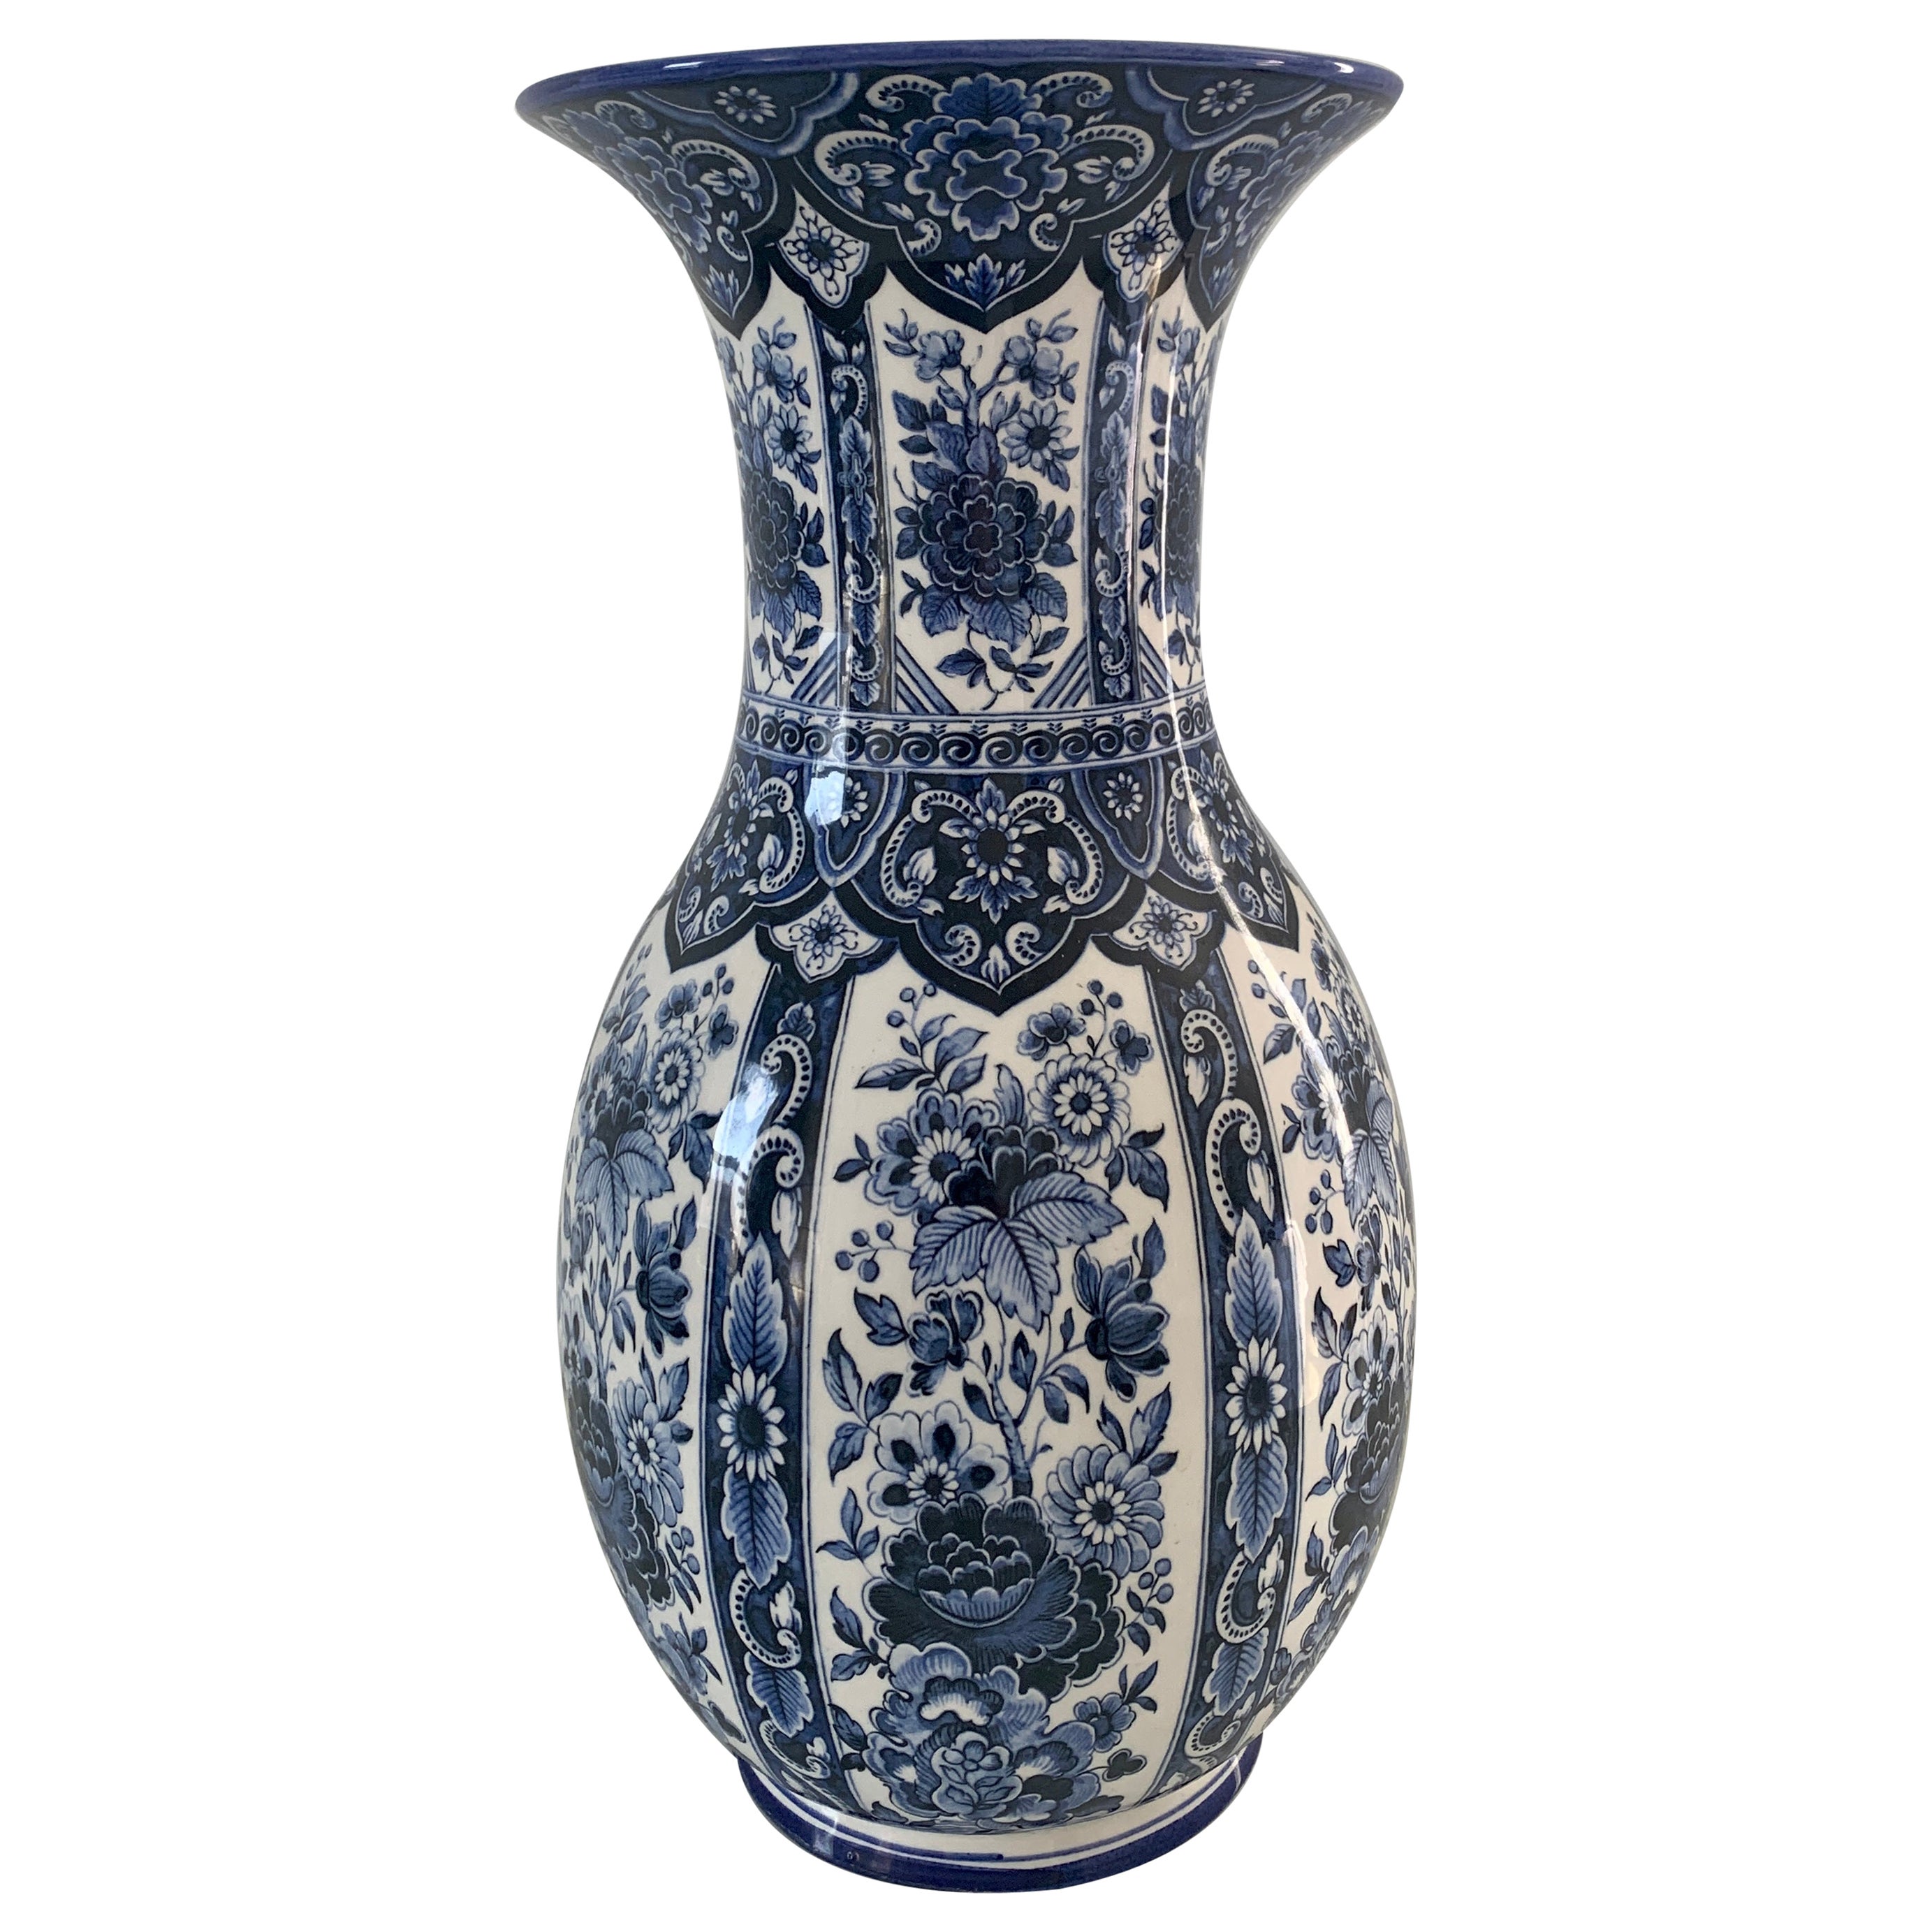 Delfts Blue and White chinoiserie Porcelain Vase